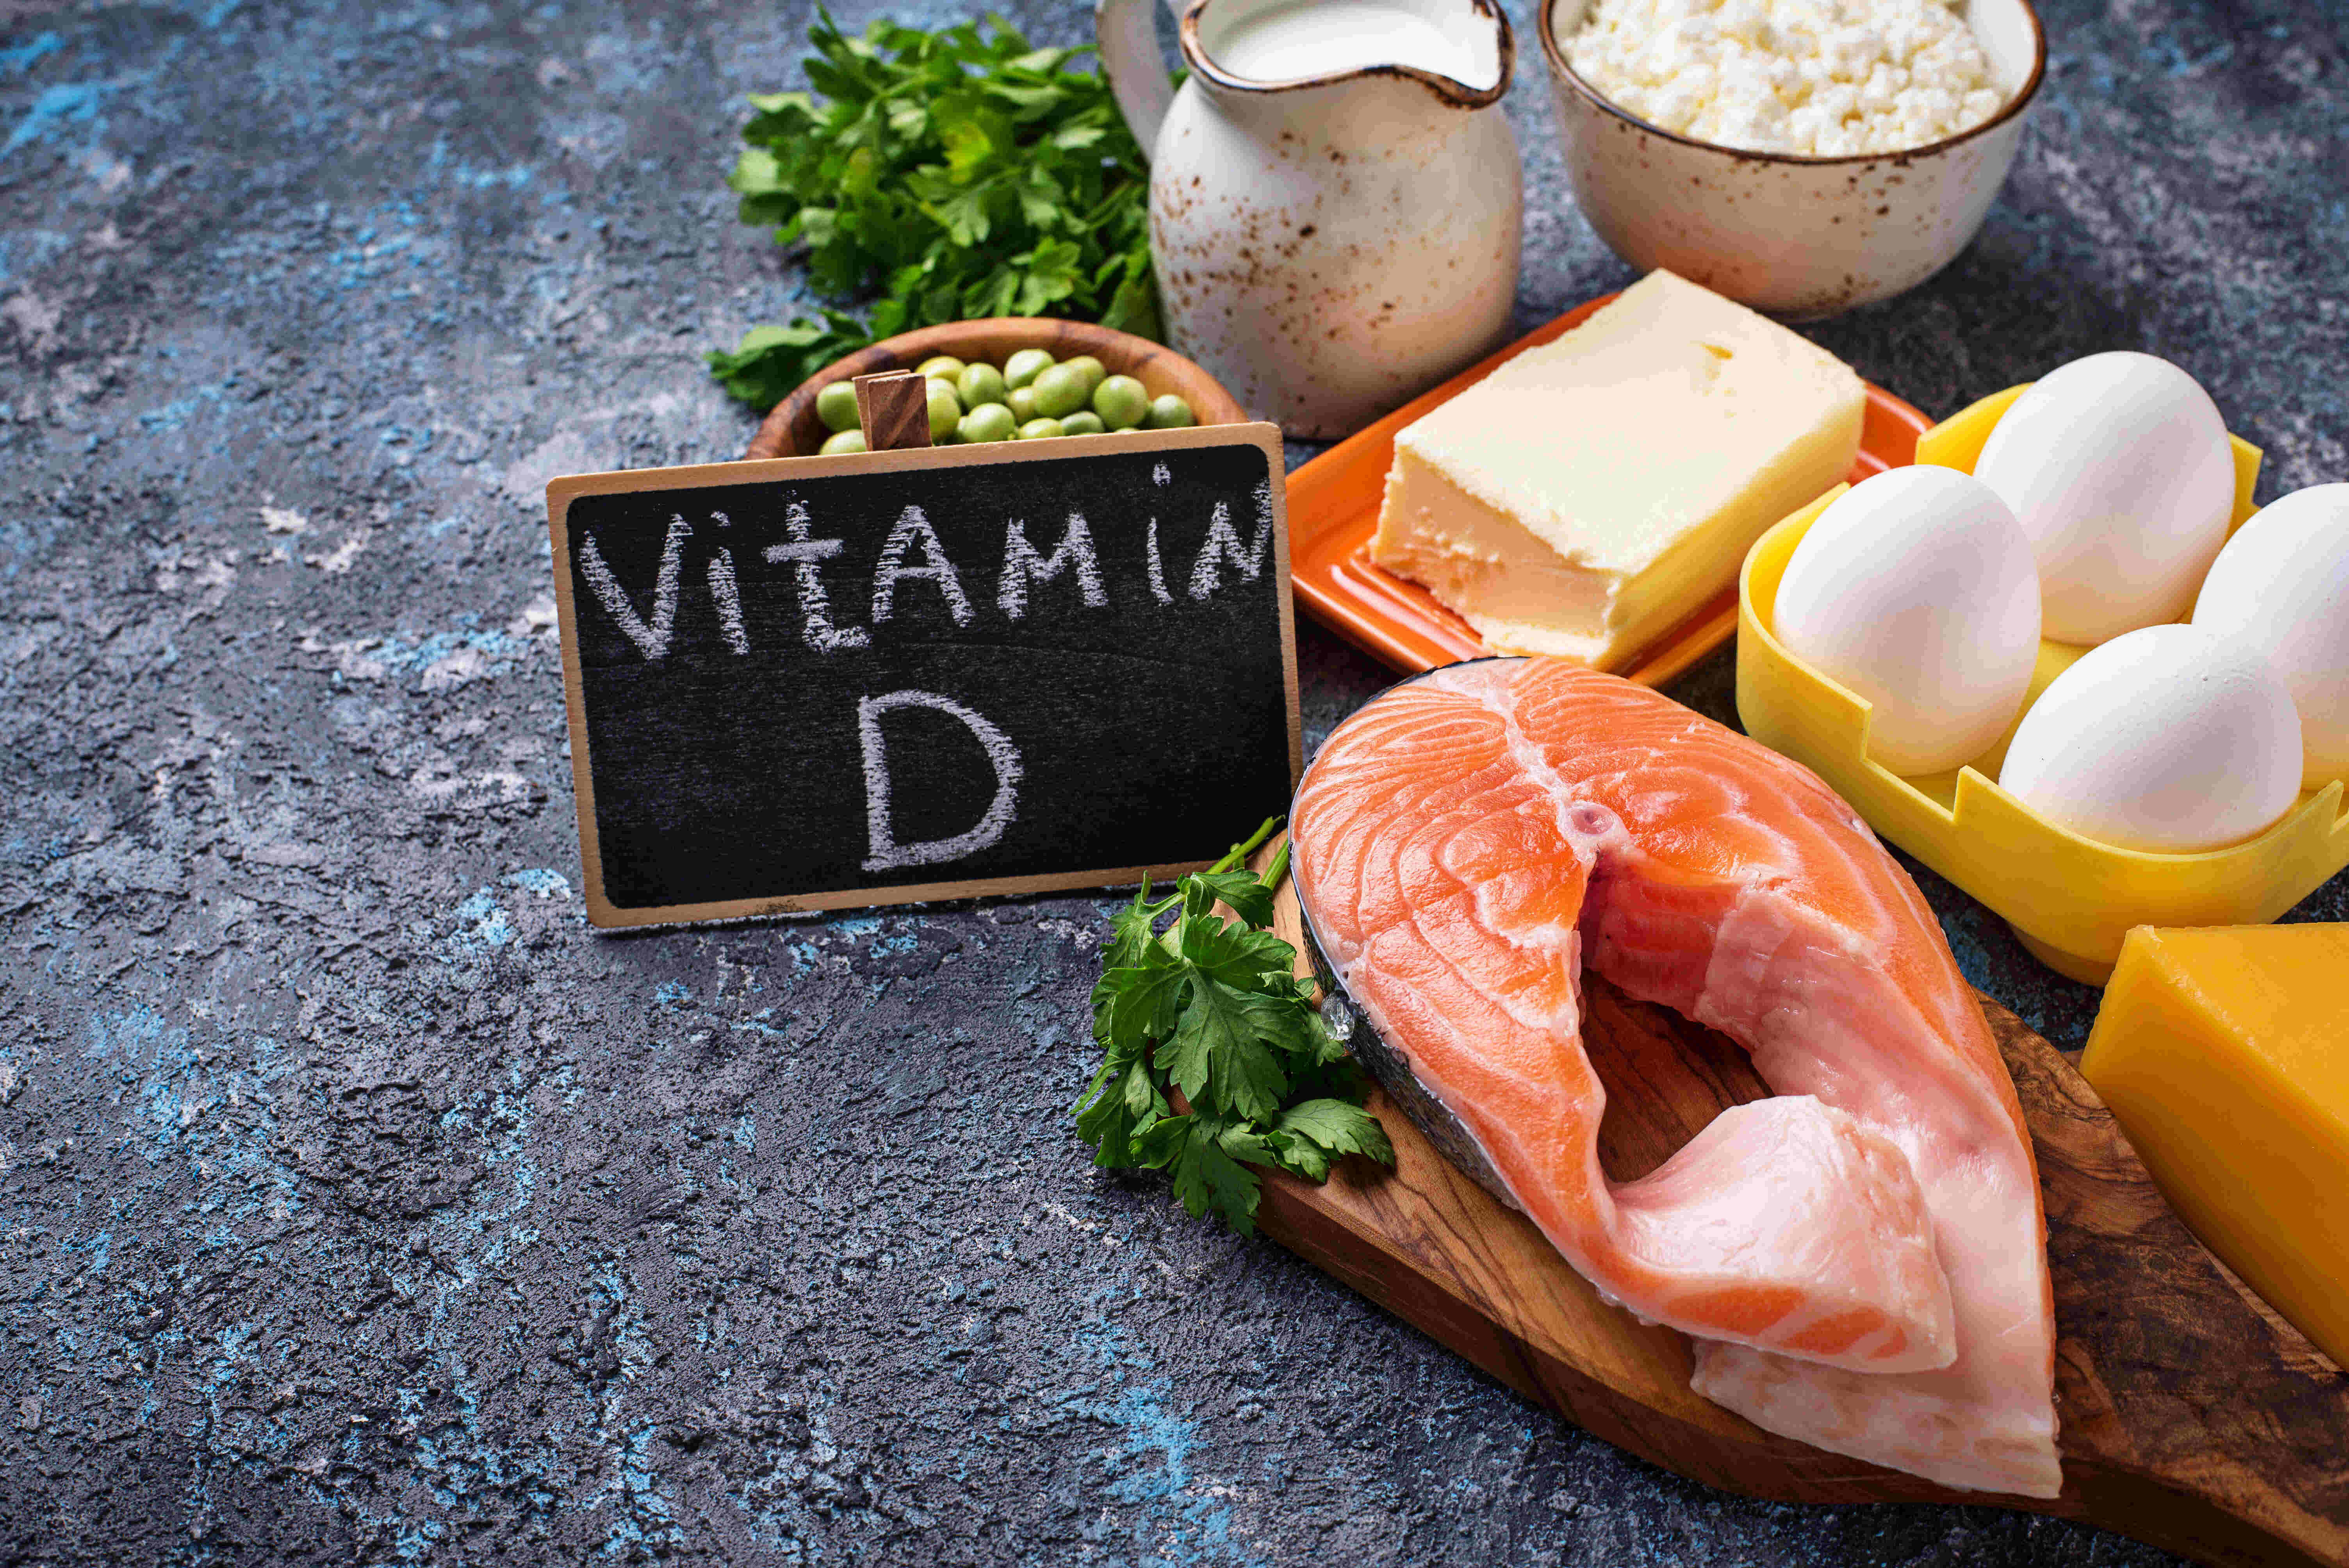 vitamin d foods for vegetarians